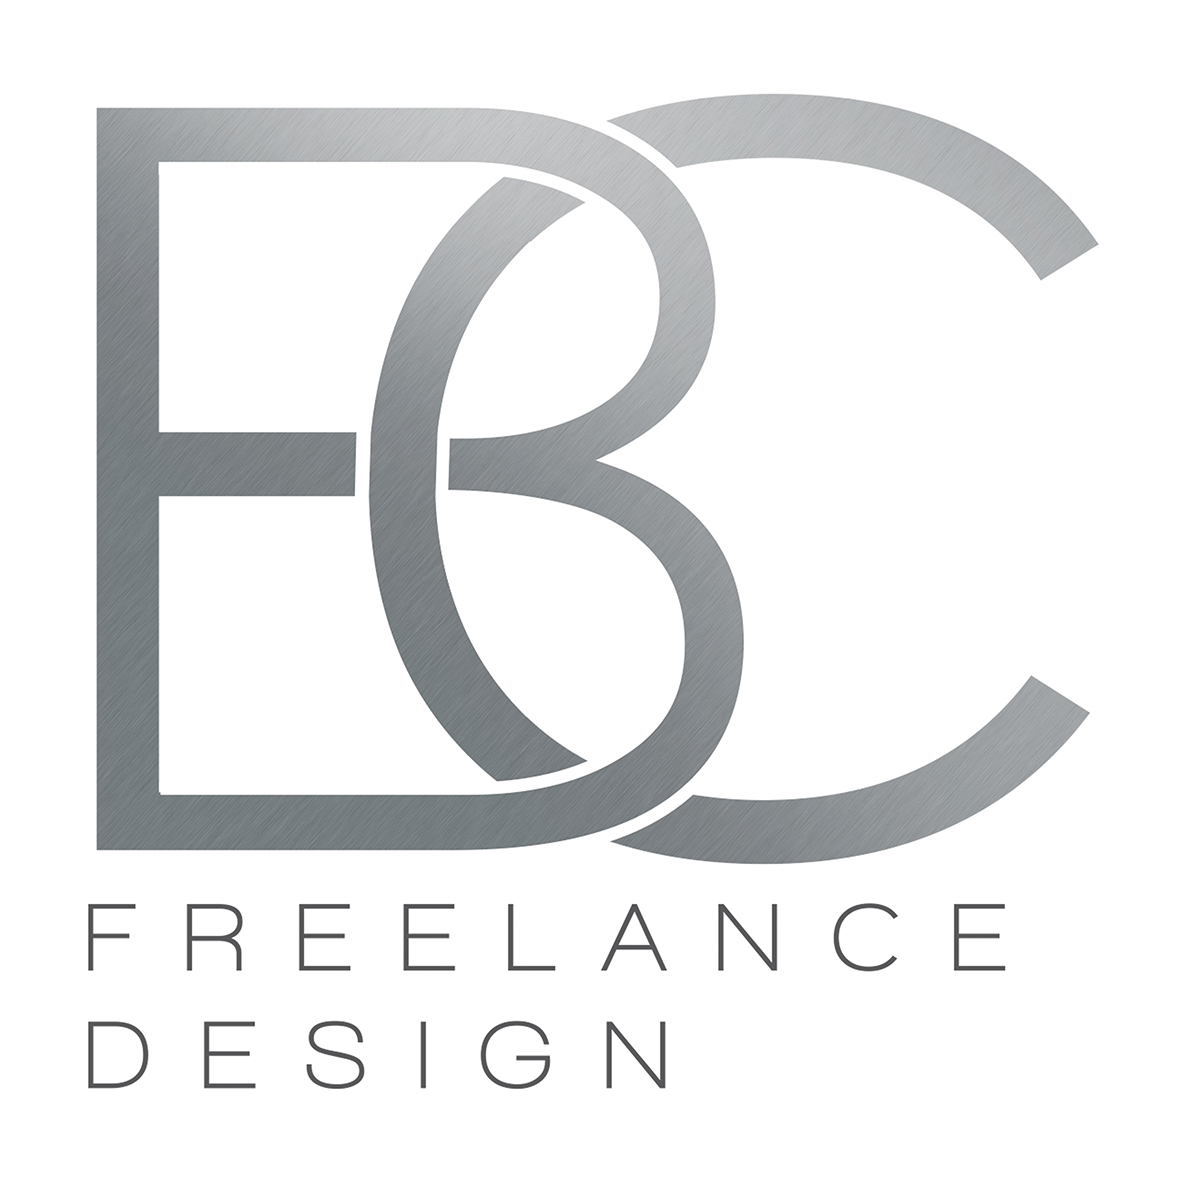 BC freelance design - Great Ocean Road Tourism